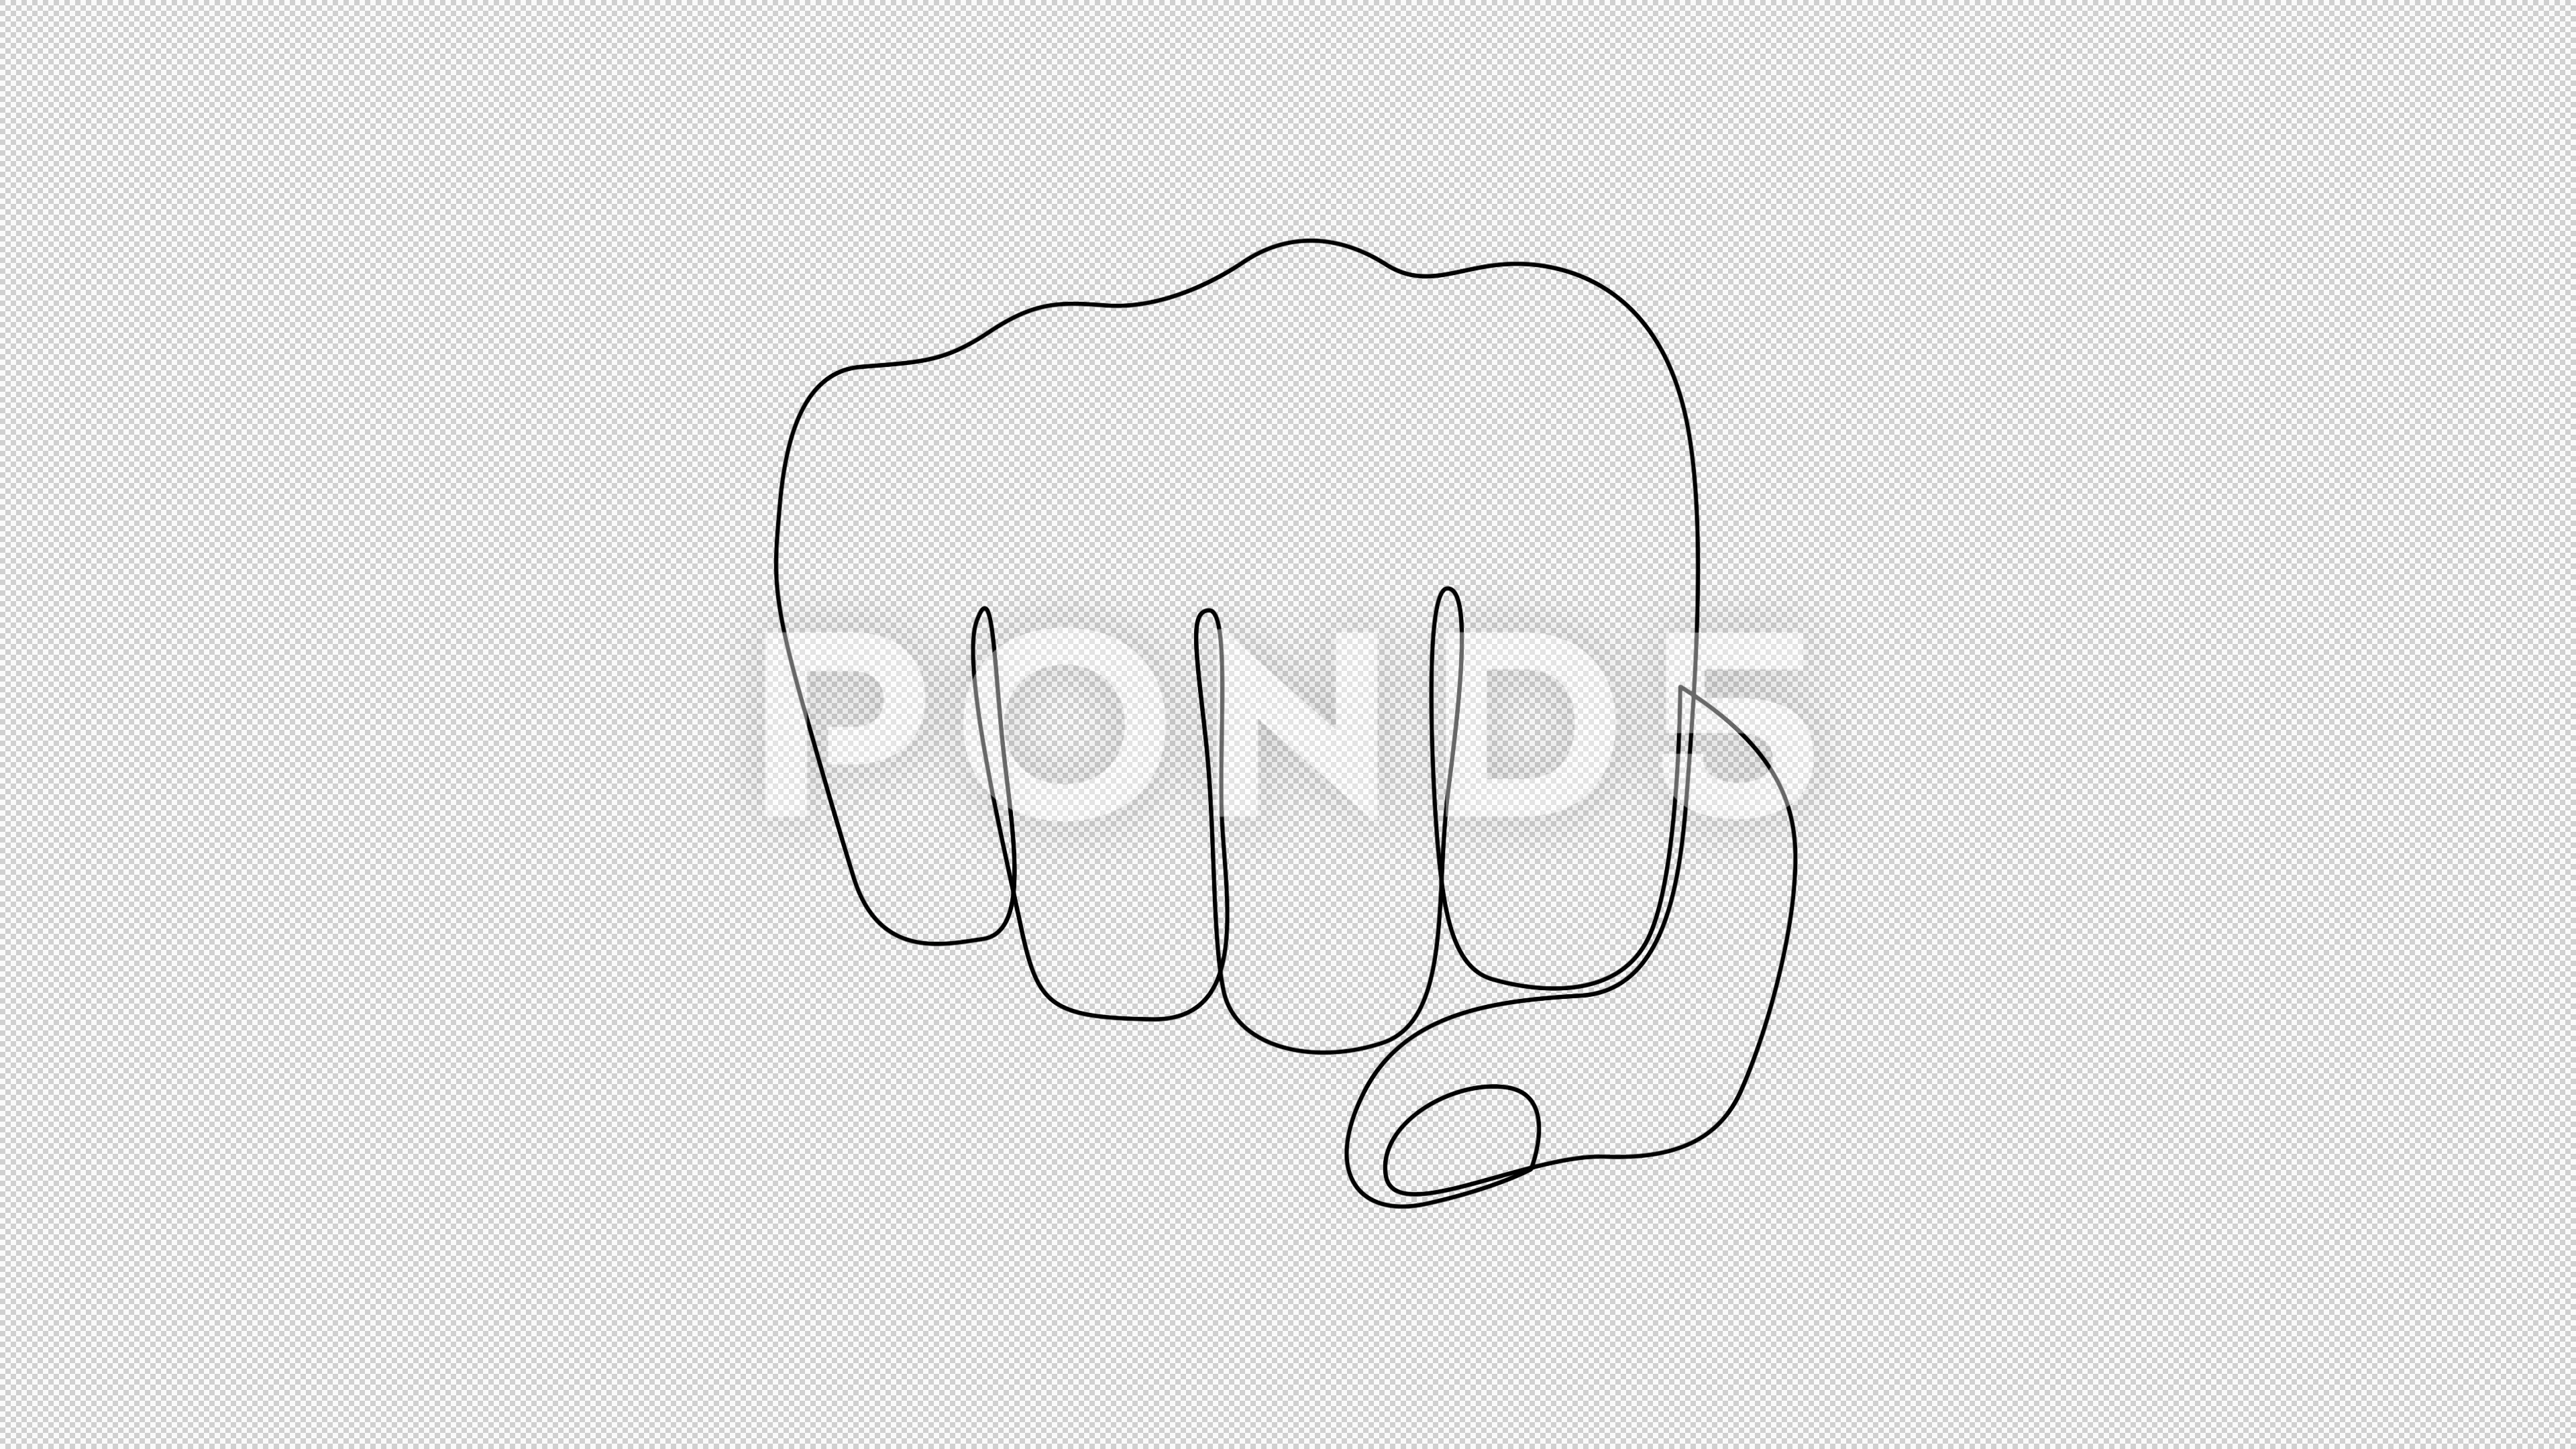 fist punch animation